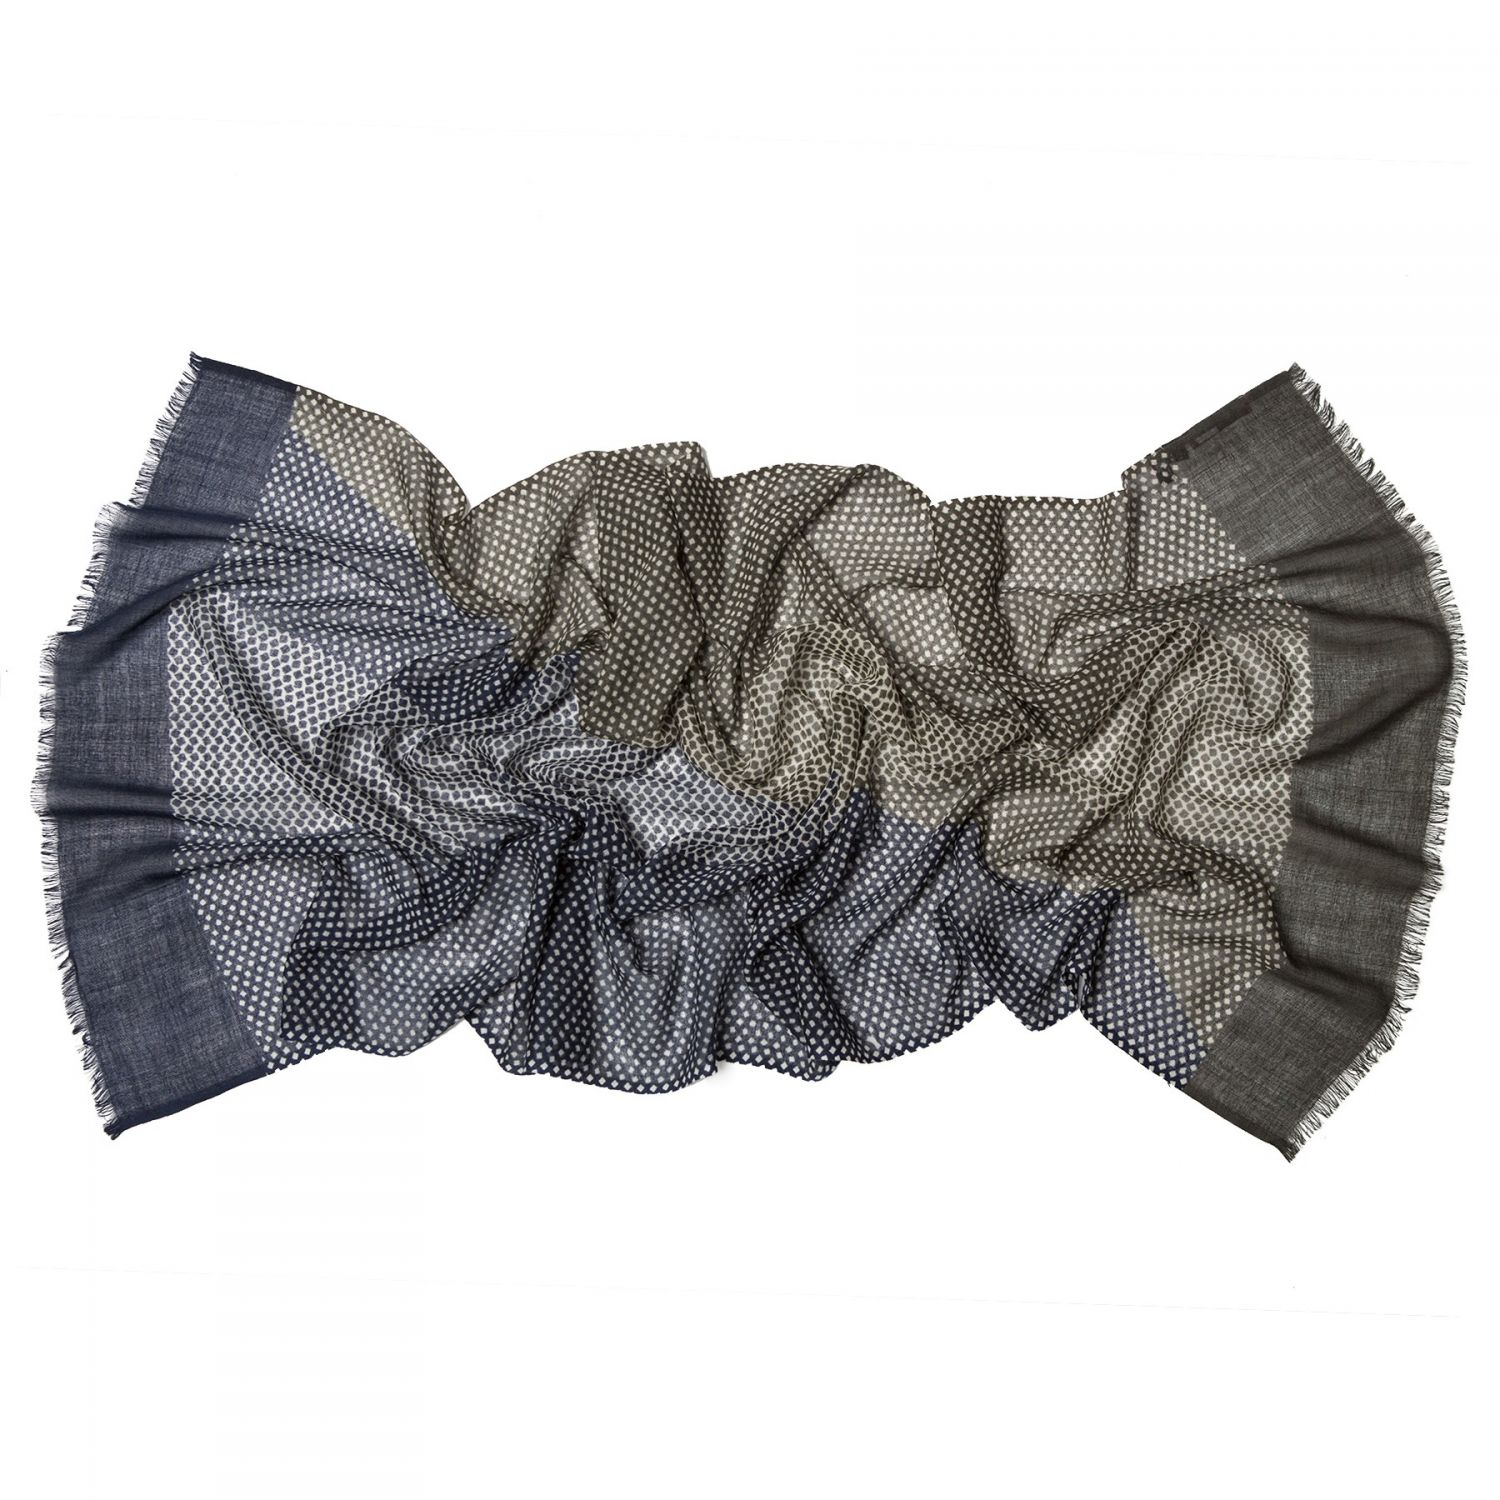 Wool scarf Mila Schon unisex green navy pattern